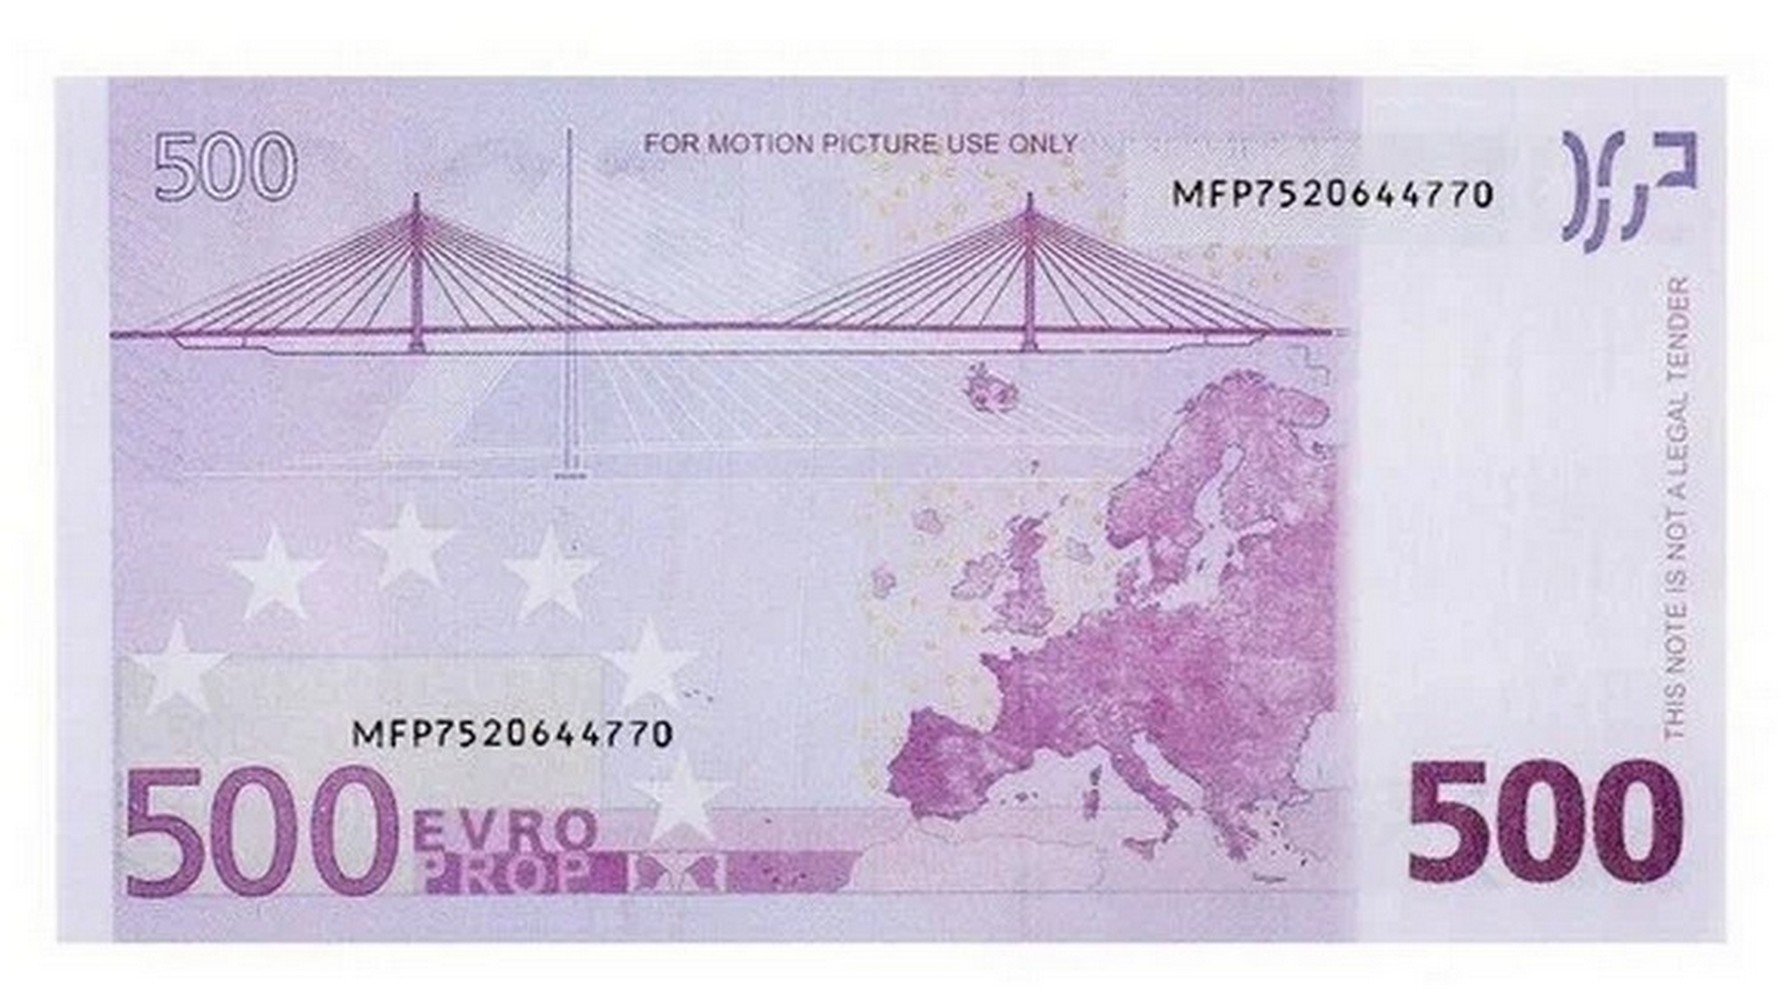 500 евро купить. 500 Евро пачка. 500 Евро изображение. Пачка купюр 500 евро. 500 Евро распечатать.